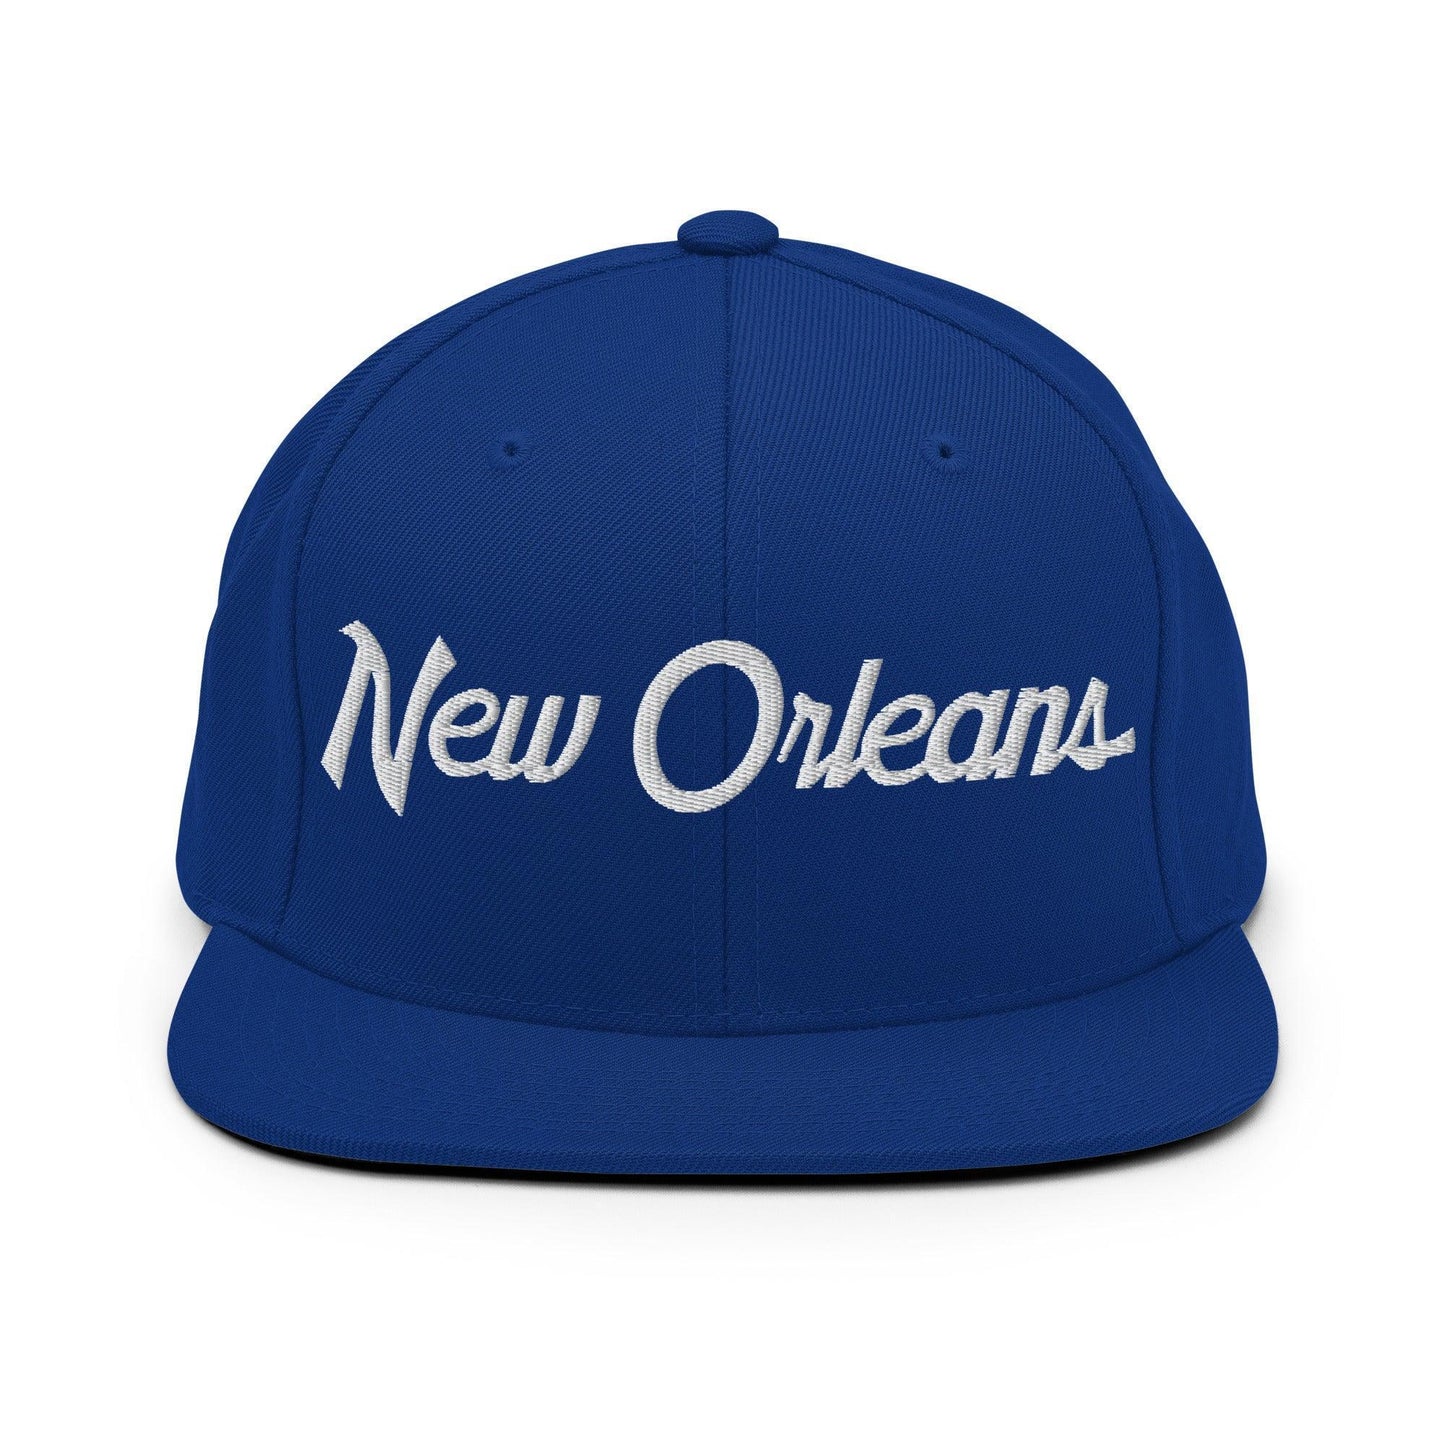 New Orleans Script Snapback Hat Royal Blue